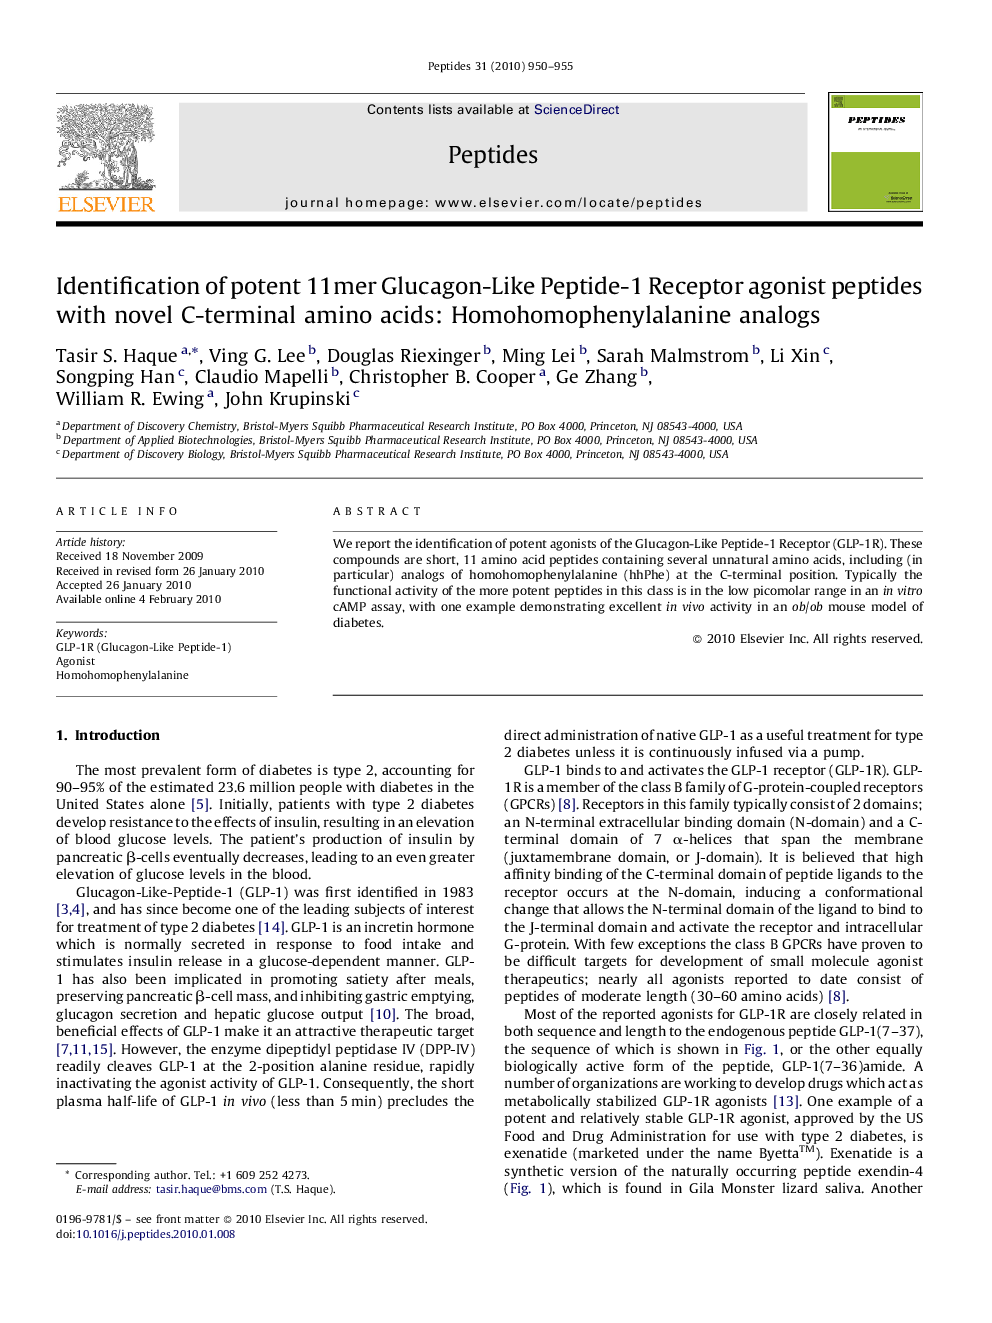 Identification of potent 11mer Glucagon-Like Peptide-1 Receptor agonist peptides with novel C-terminal amino acids: Homohomophenylalanine analogs